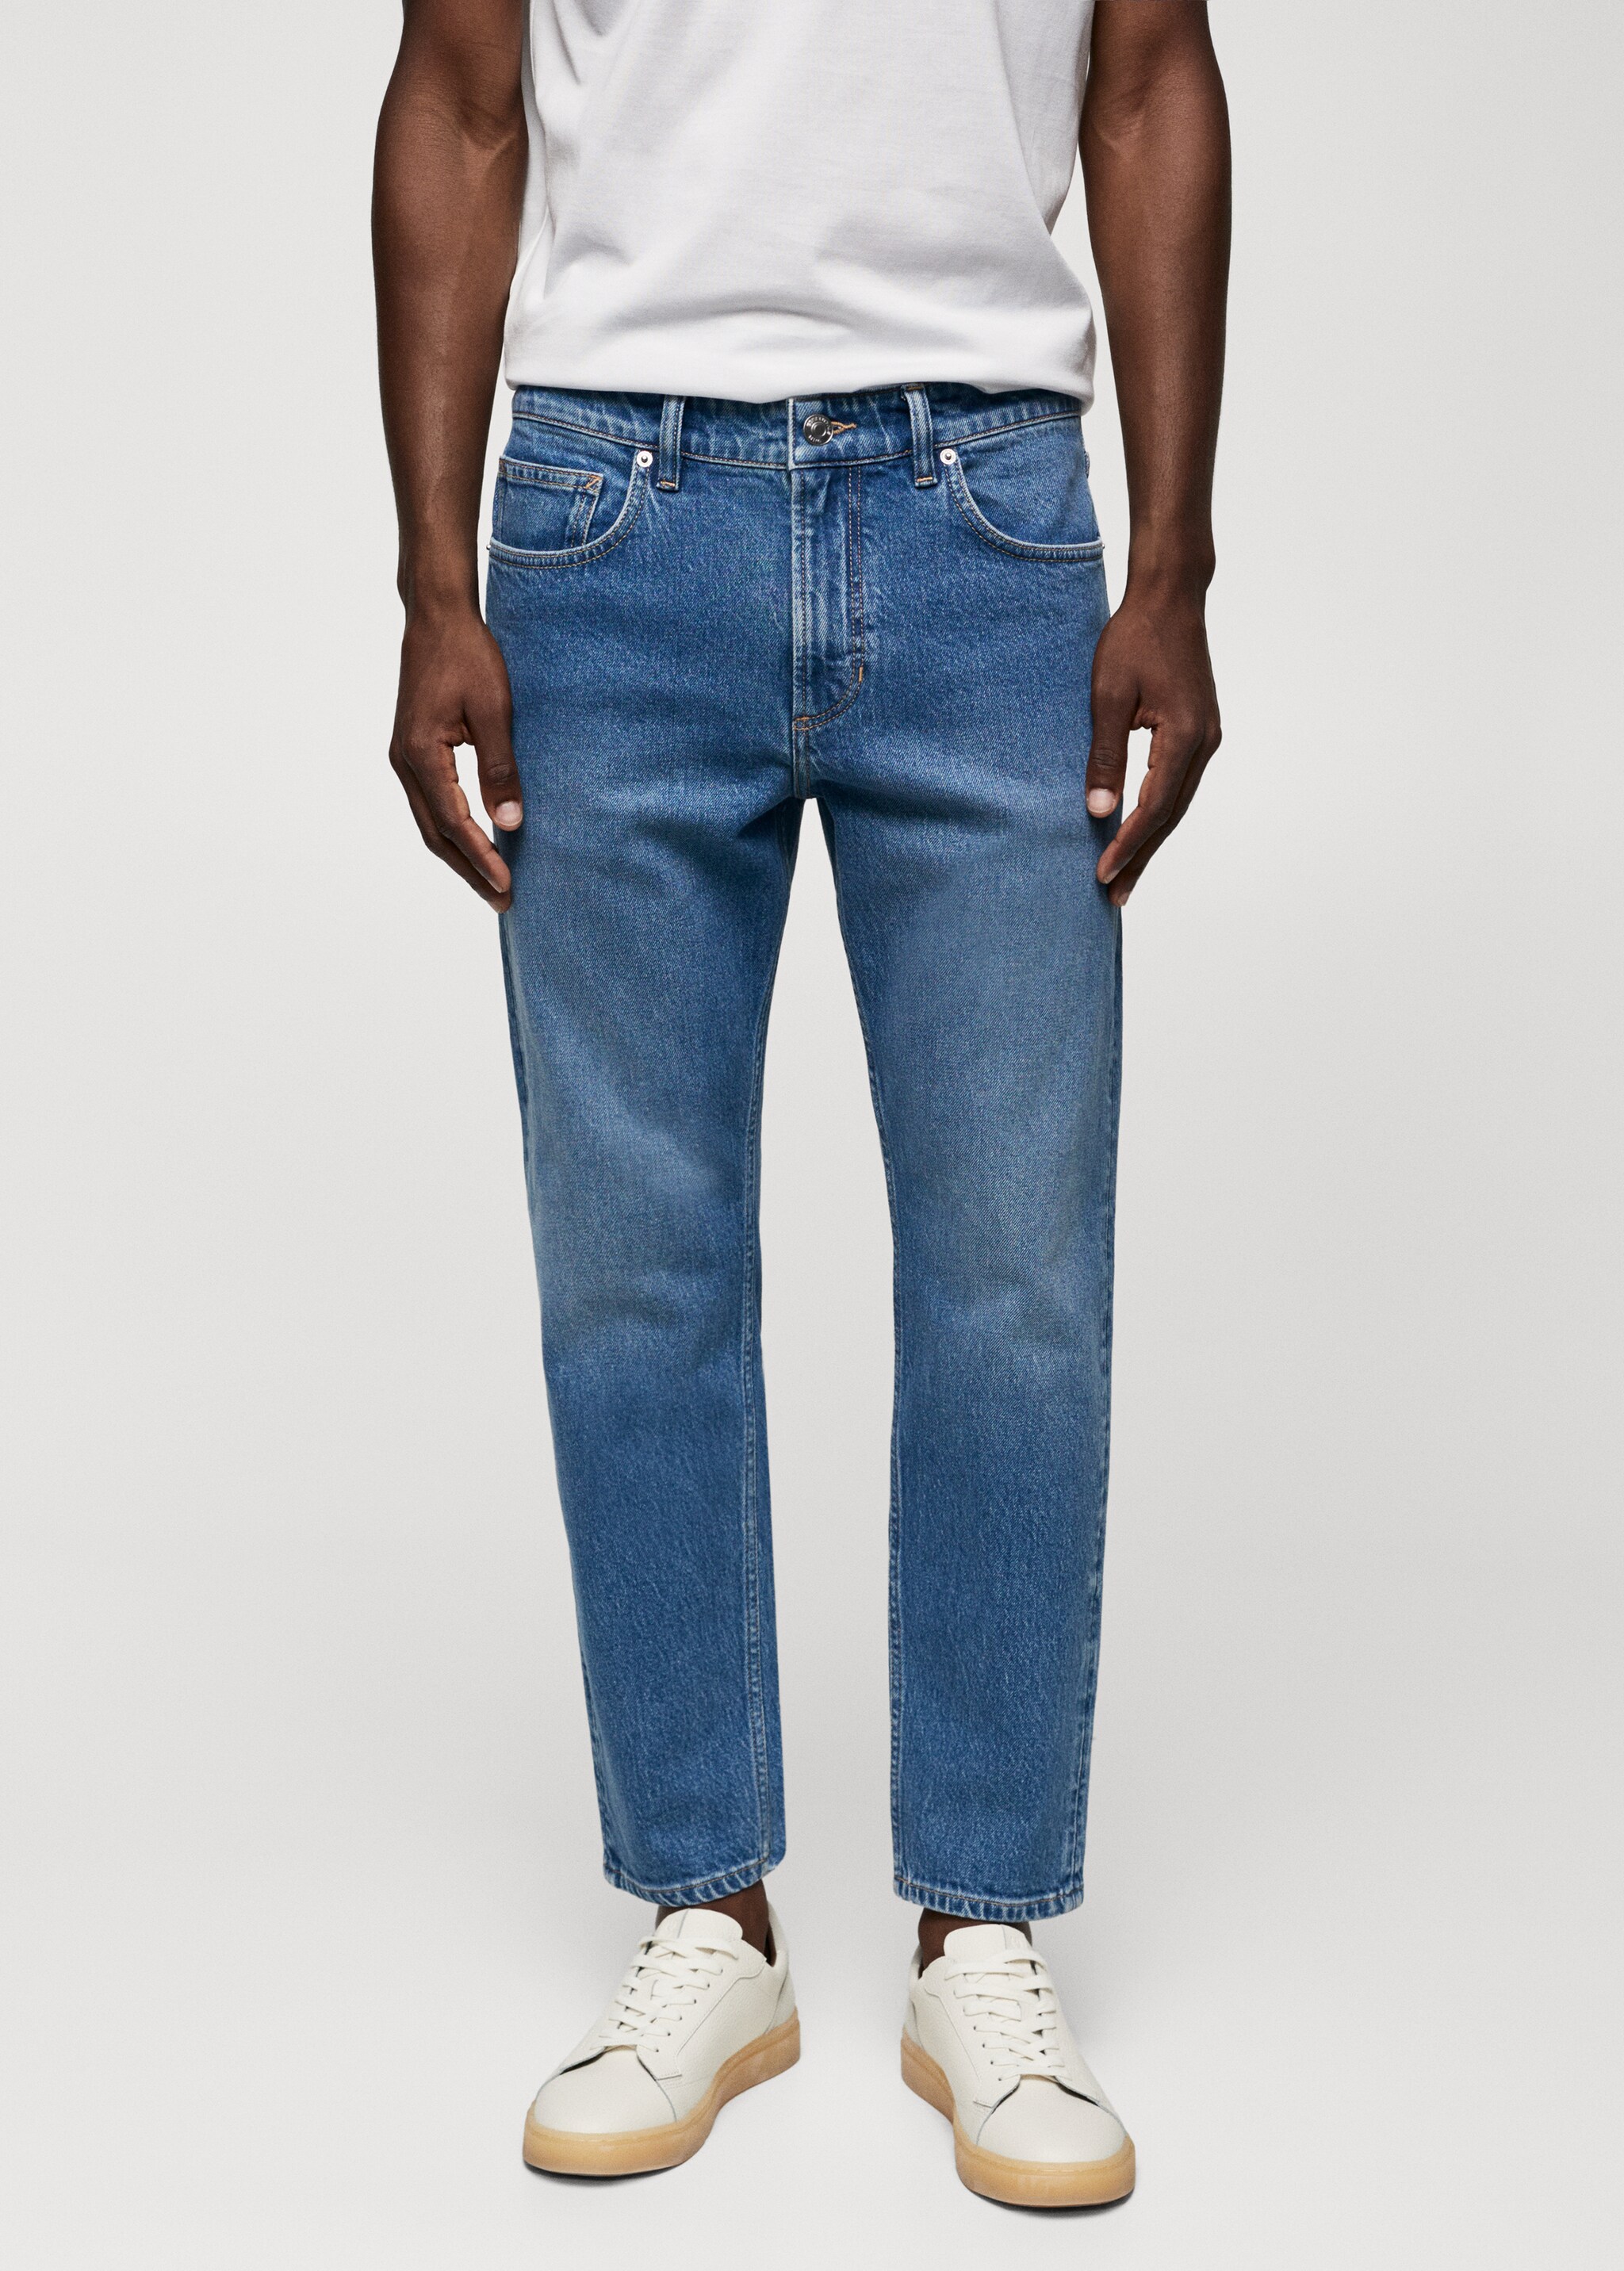 Ben tapered cropped jeans - Medium plane